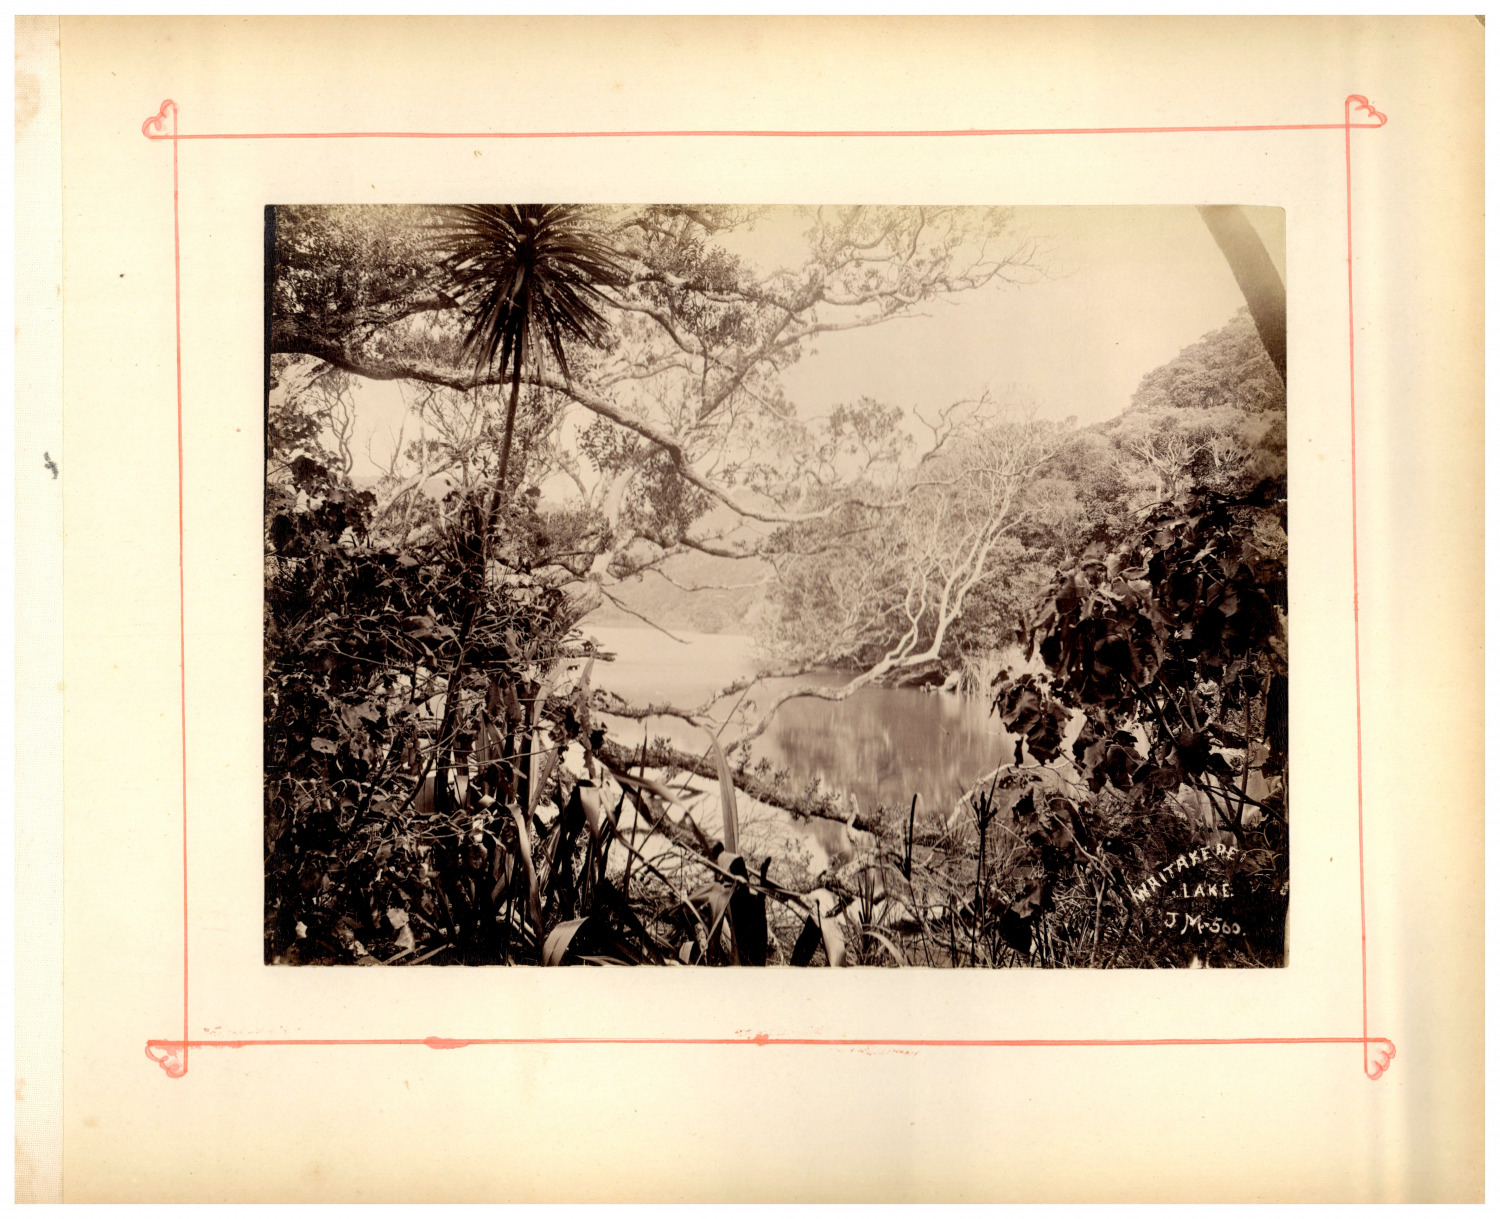 New Zealand, Waitakere Lake, Photo. J.M. Vintage print, albumin print 24 print